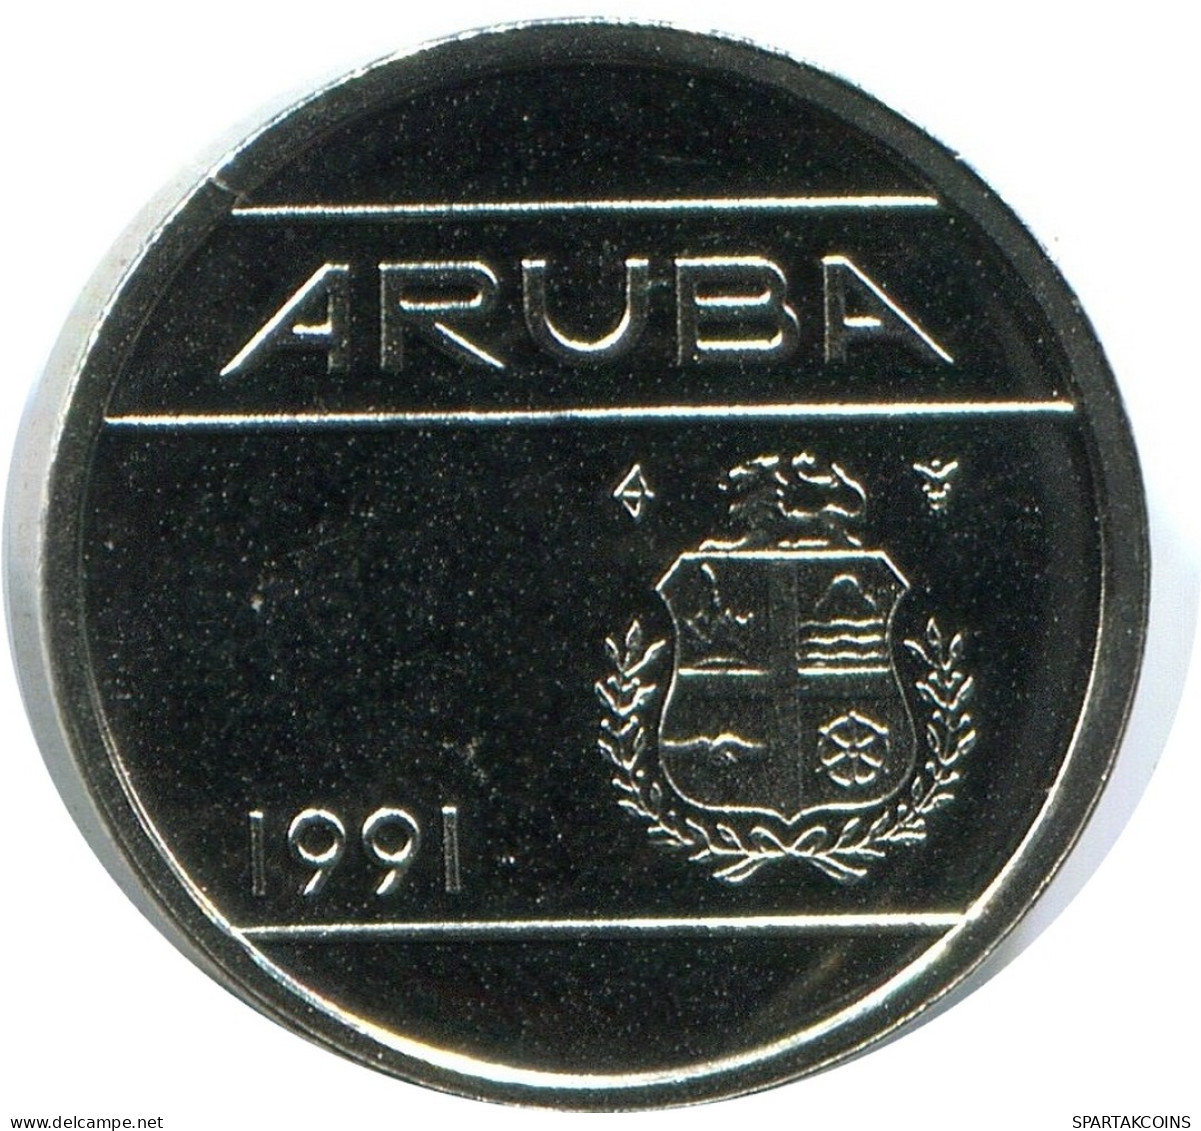 5 CENTS 1991 ARUBA Coin (From BU Mint Set) #AH112.U - Aruba